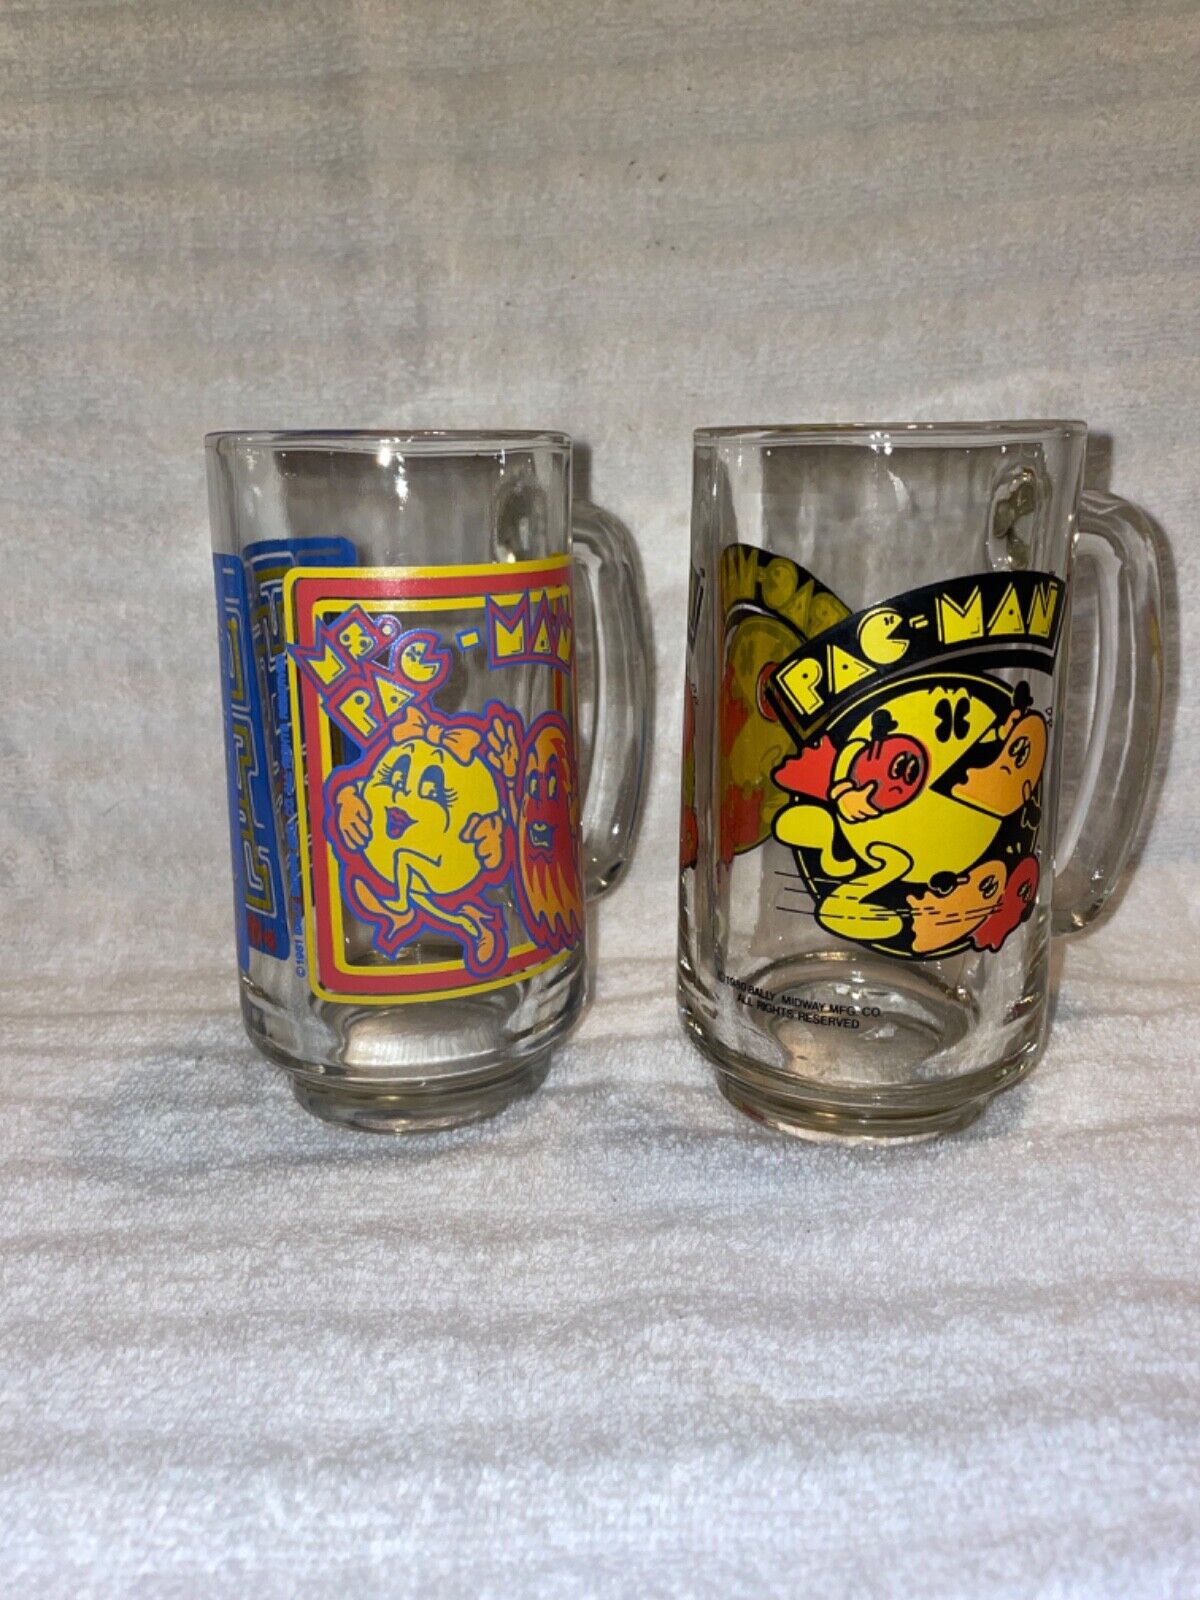 PAC-MAN (1980) & Ms PAC-MAN (1981) Bally Midway Drinking Glass Beer Mug